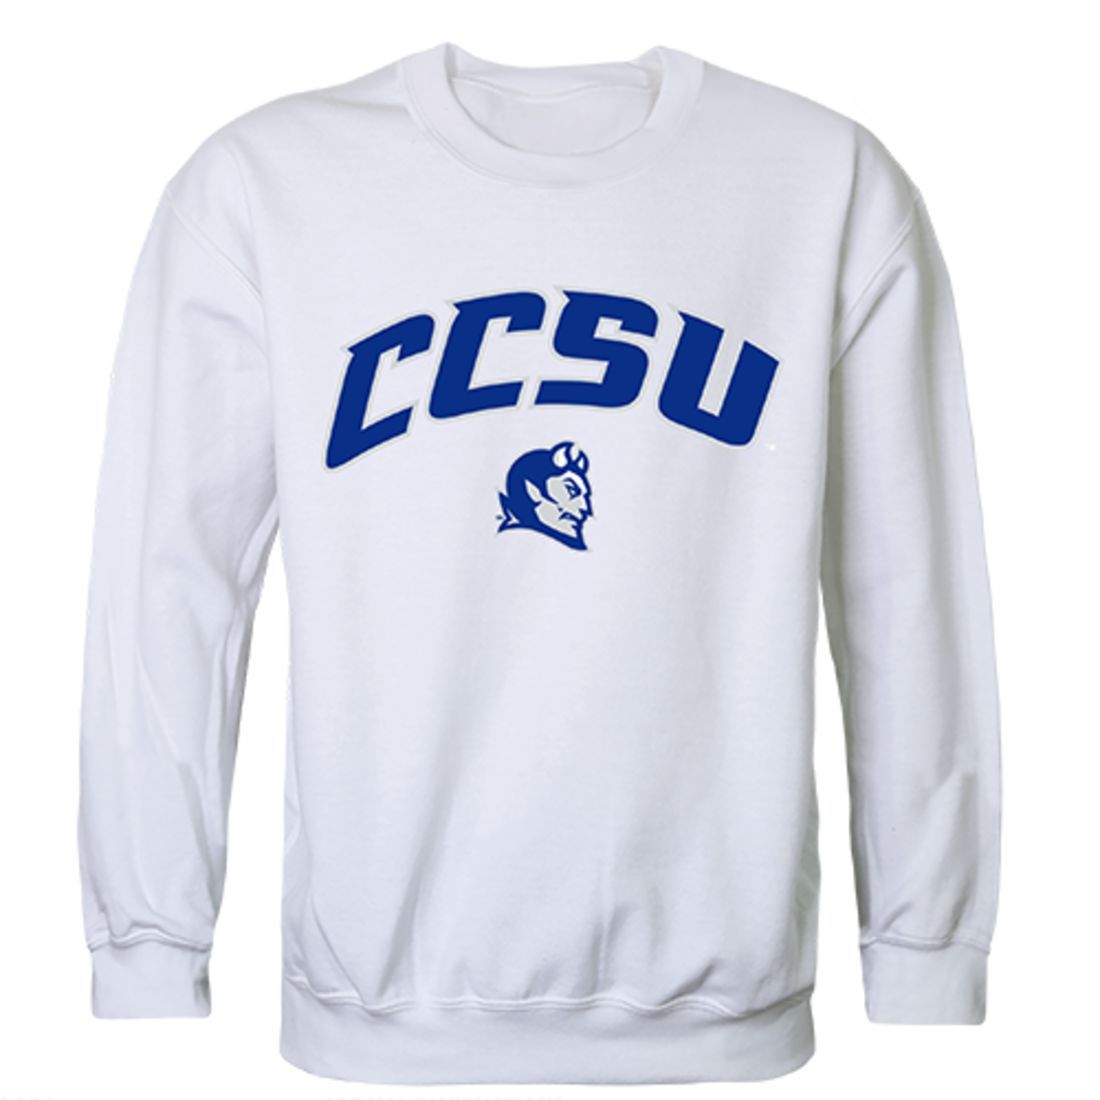 CCSU Central Connecticut State University Campus Crewneck Pullover Sweatshirt Sweater White-Campus-Wardrobe